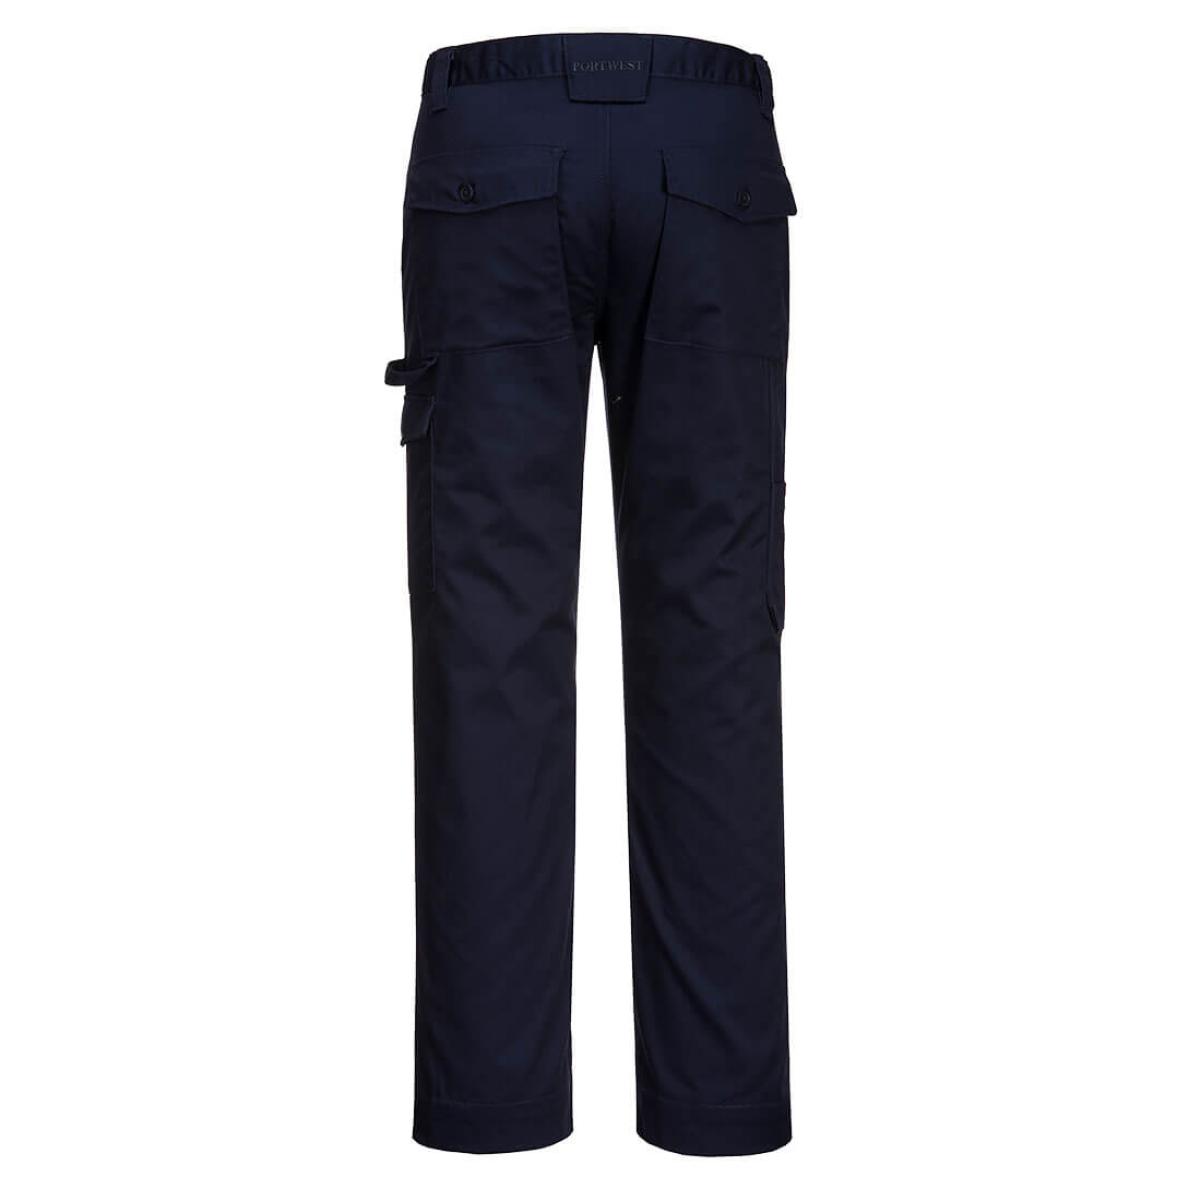 Portwest Super Work Trousers - Navy | Order Uniform UK Ltd